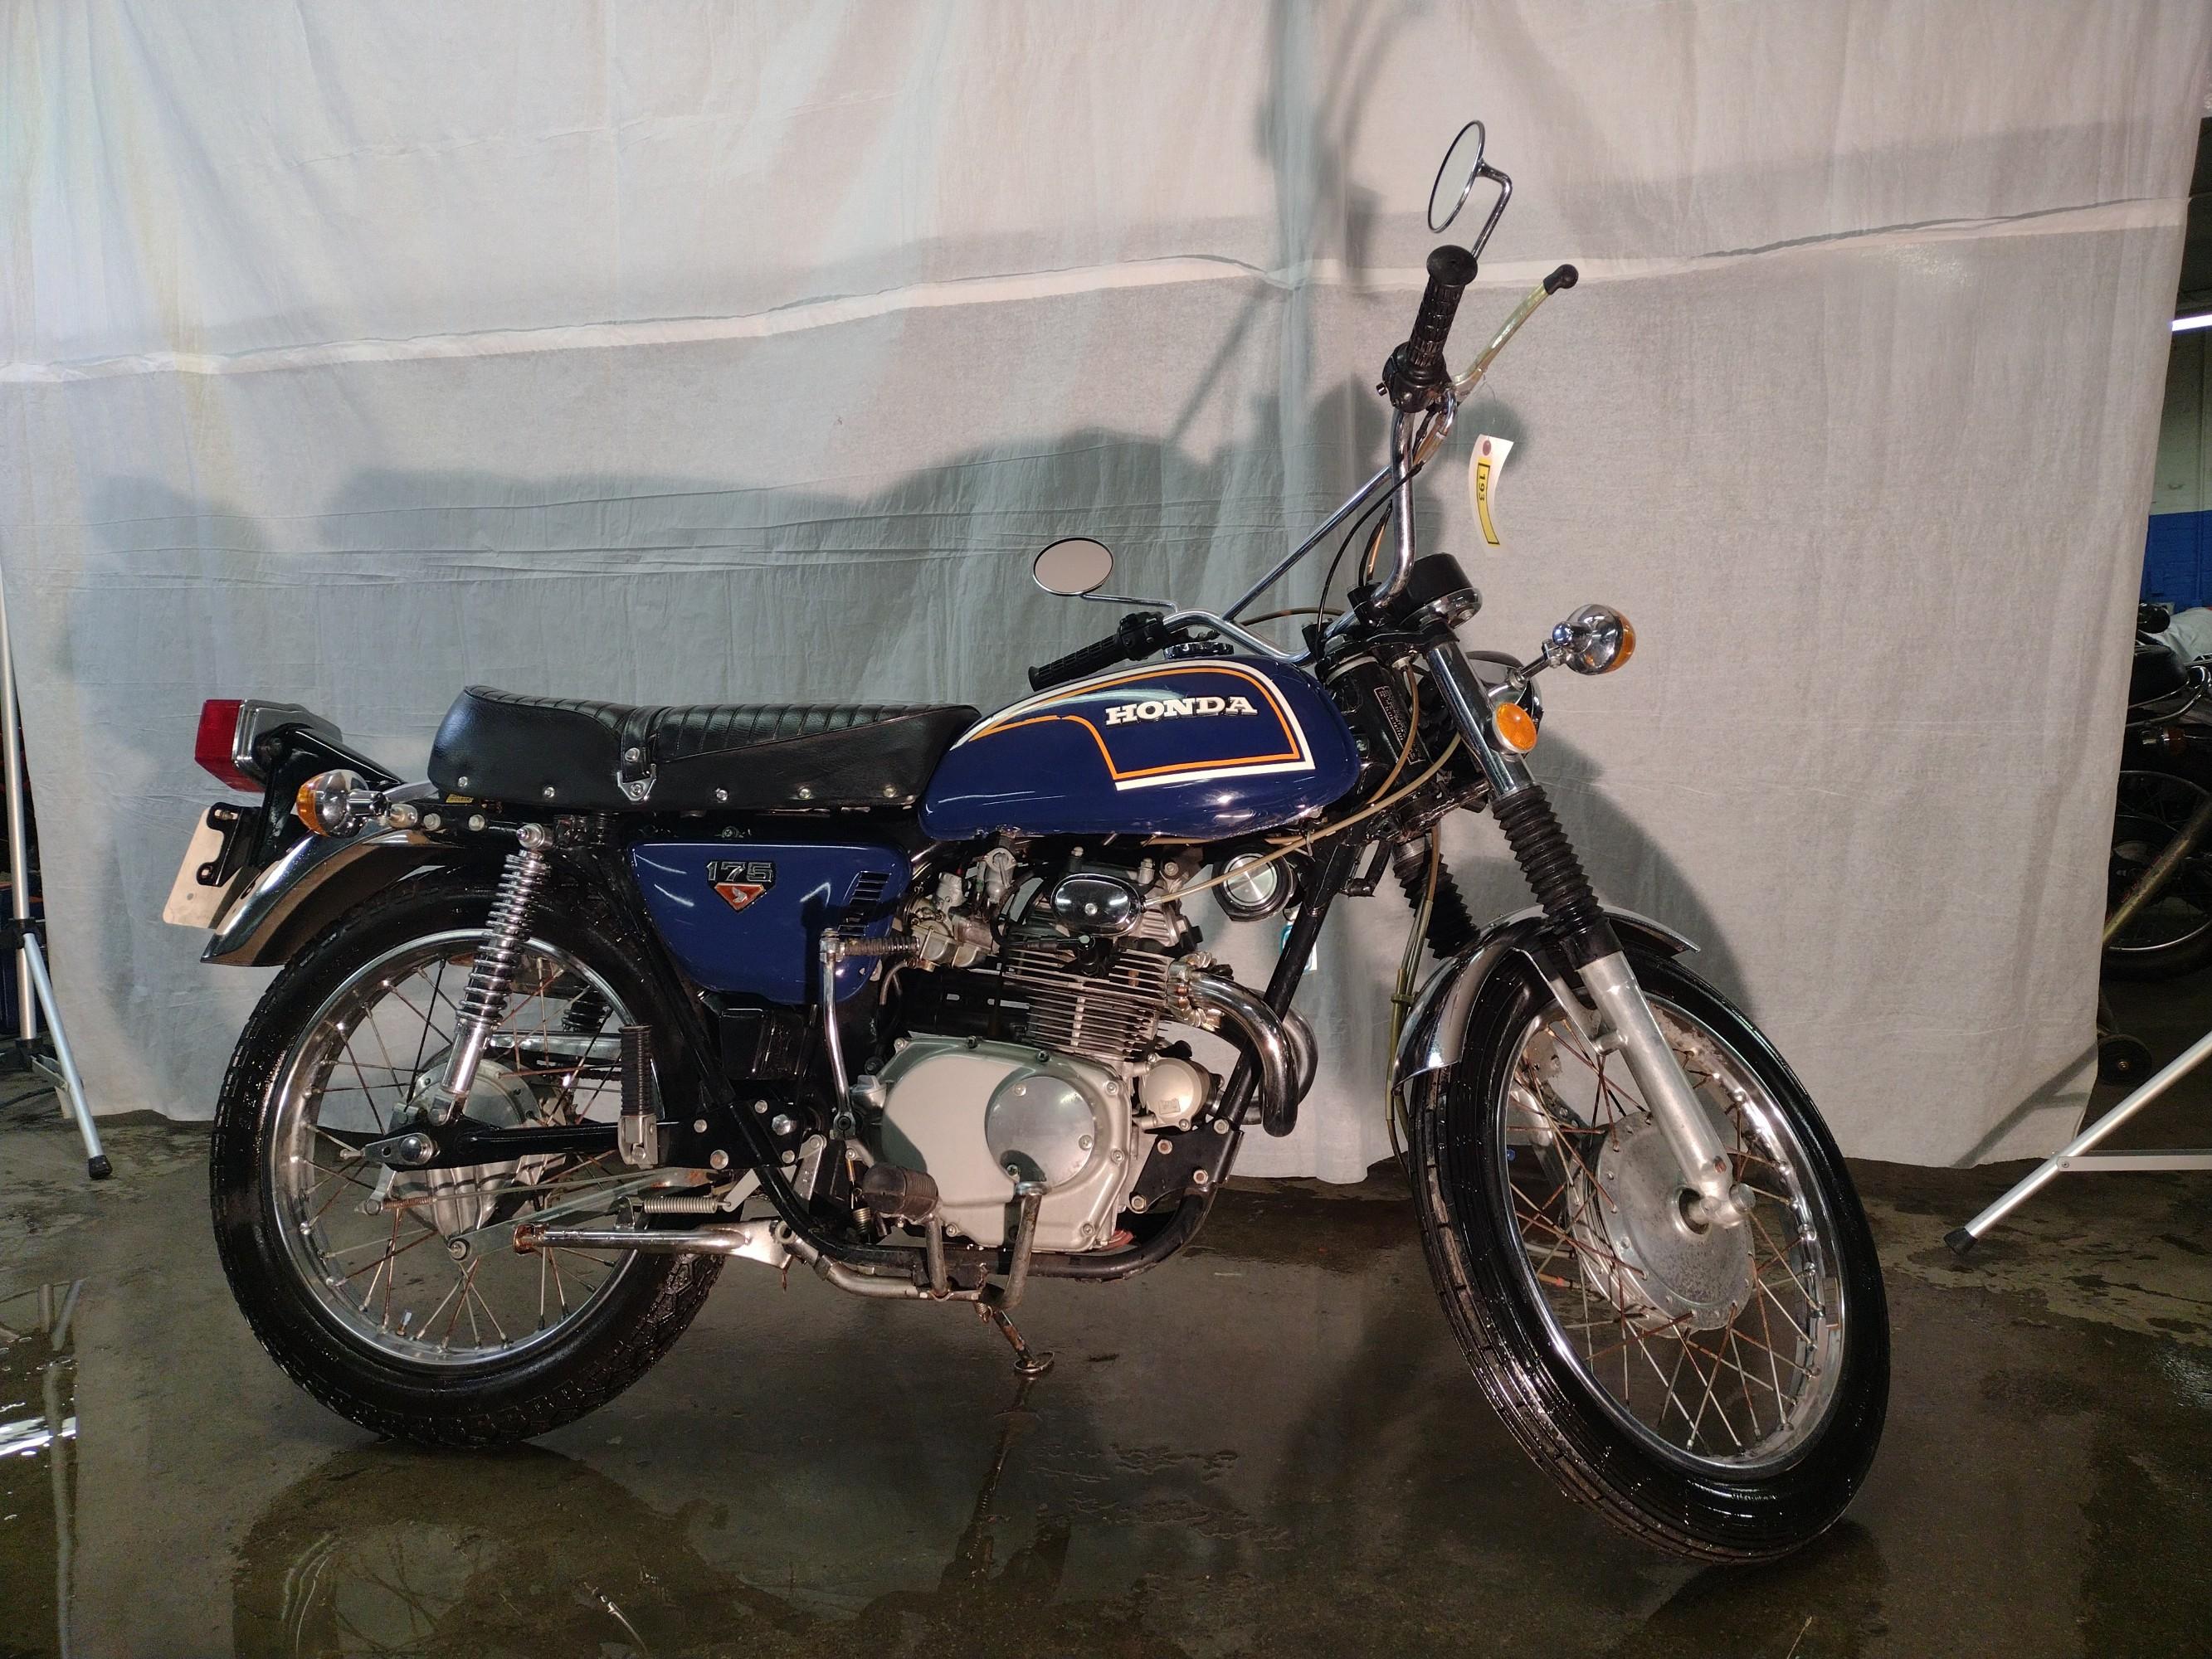 Motorcycle 1973 HONDA 175